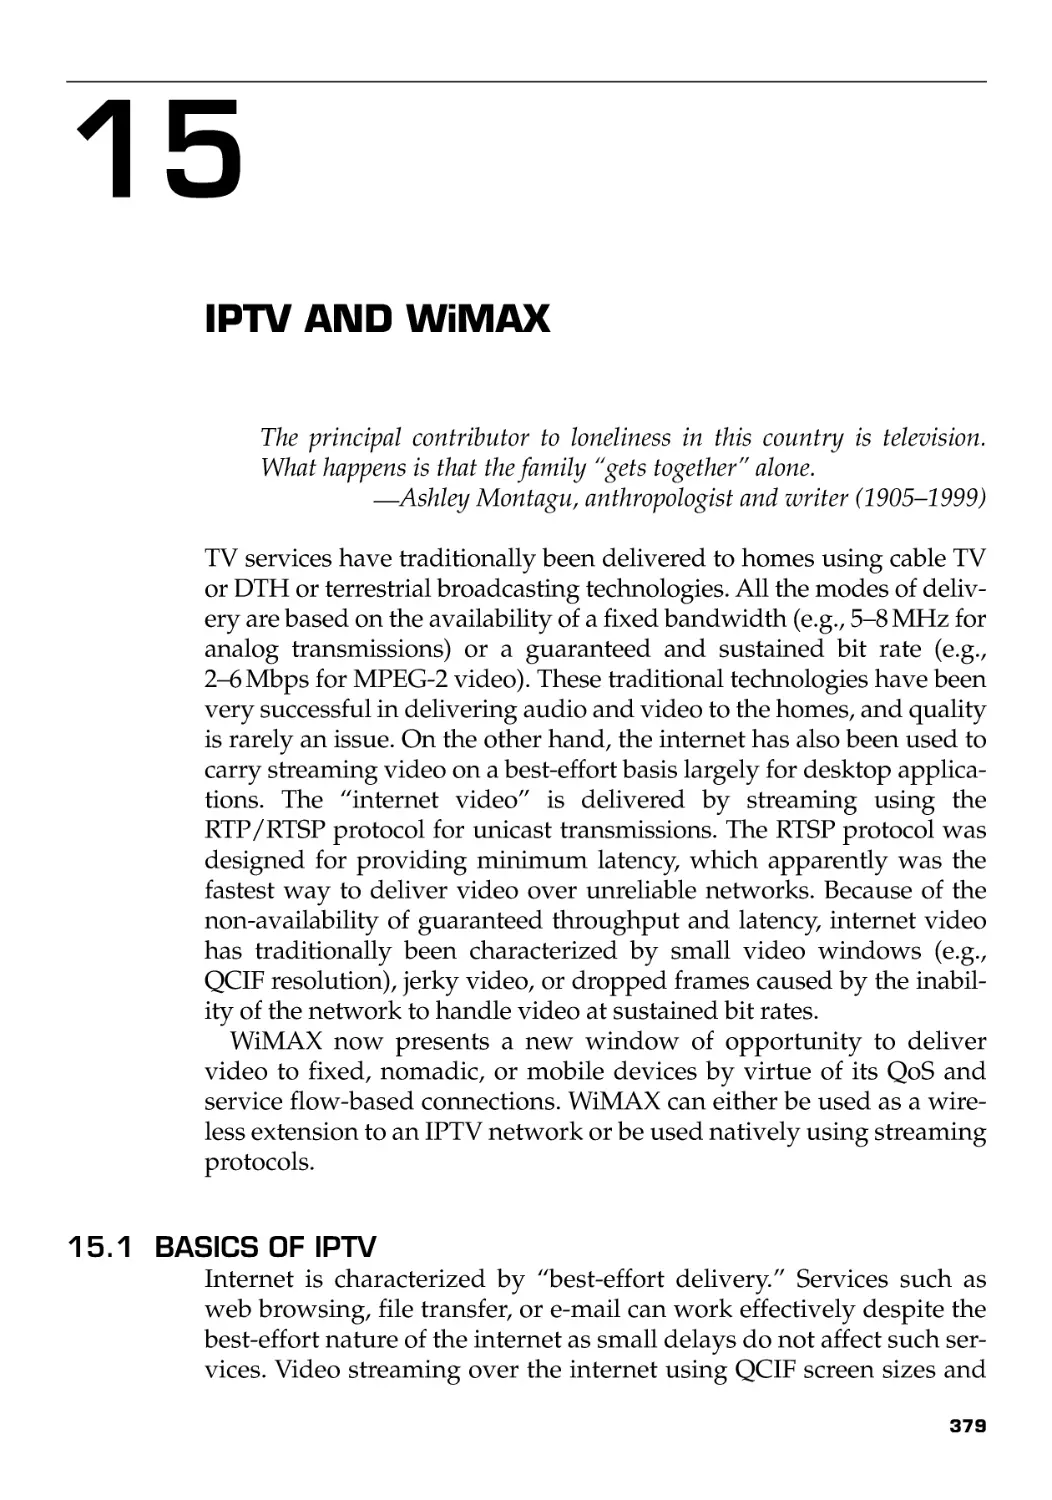 Chapter 15
15.1 Basics of IPTV